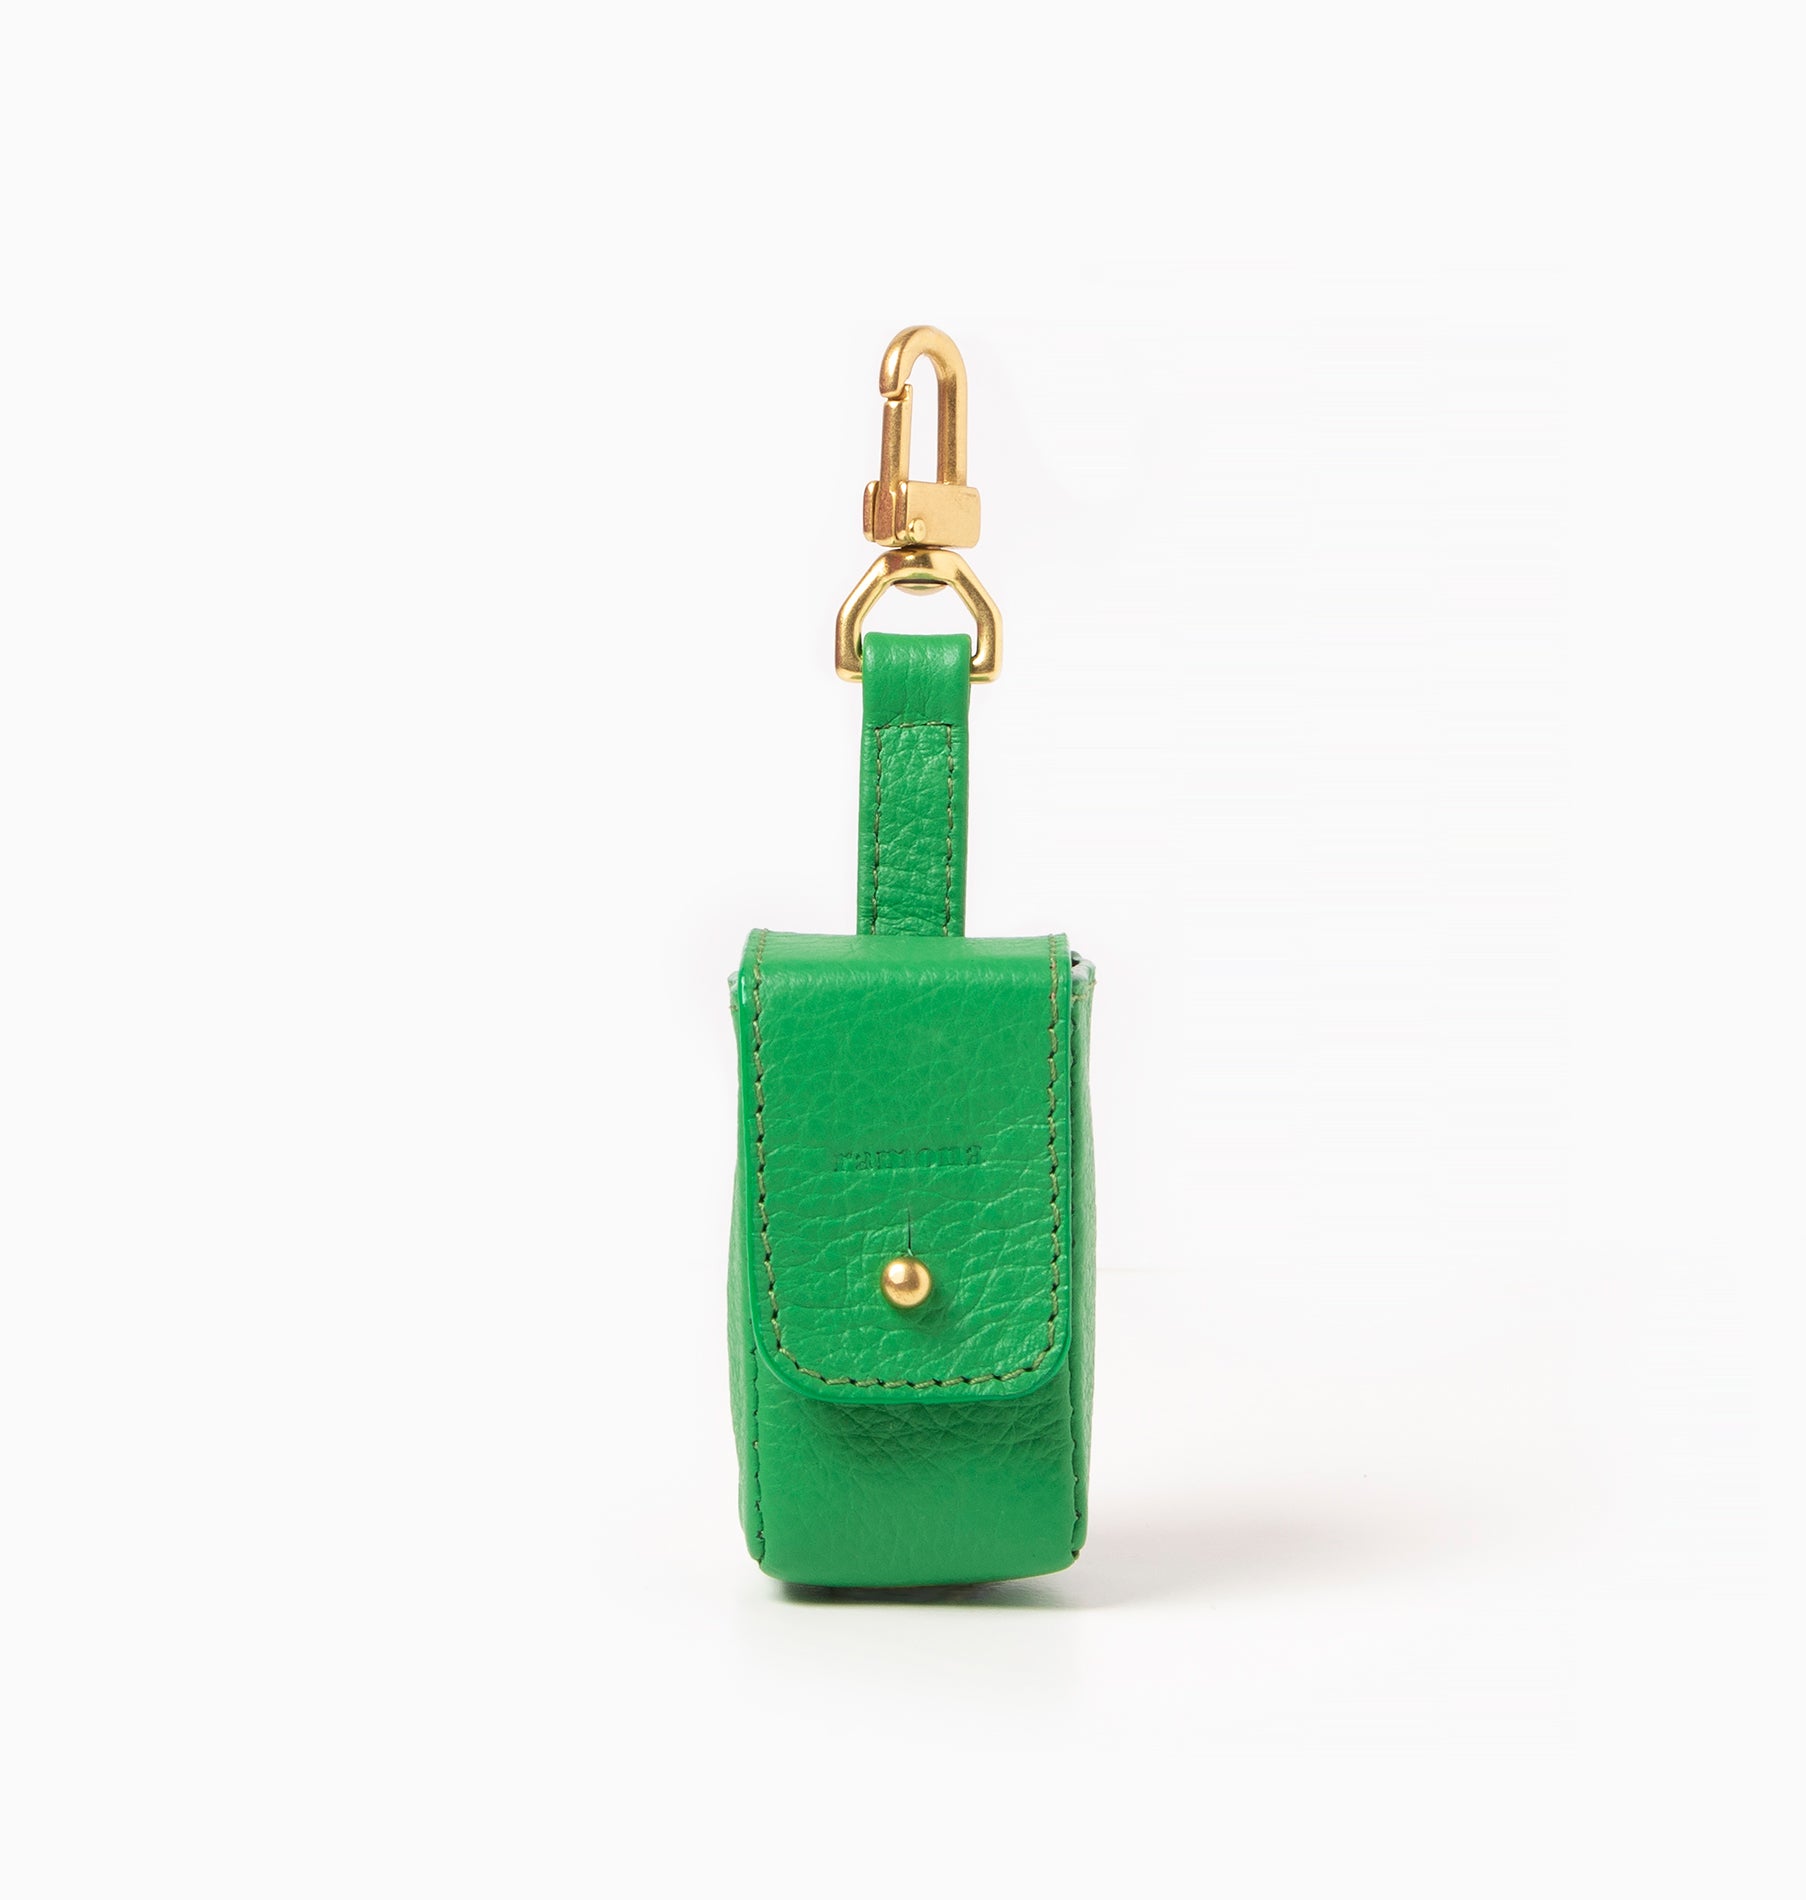 Emerald green leather bag holder with with brass hardware. Poop bag holder.